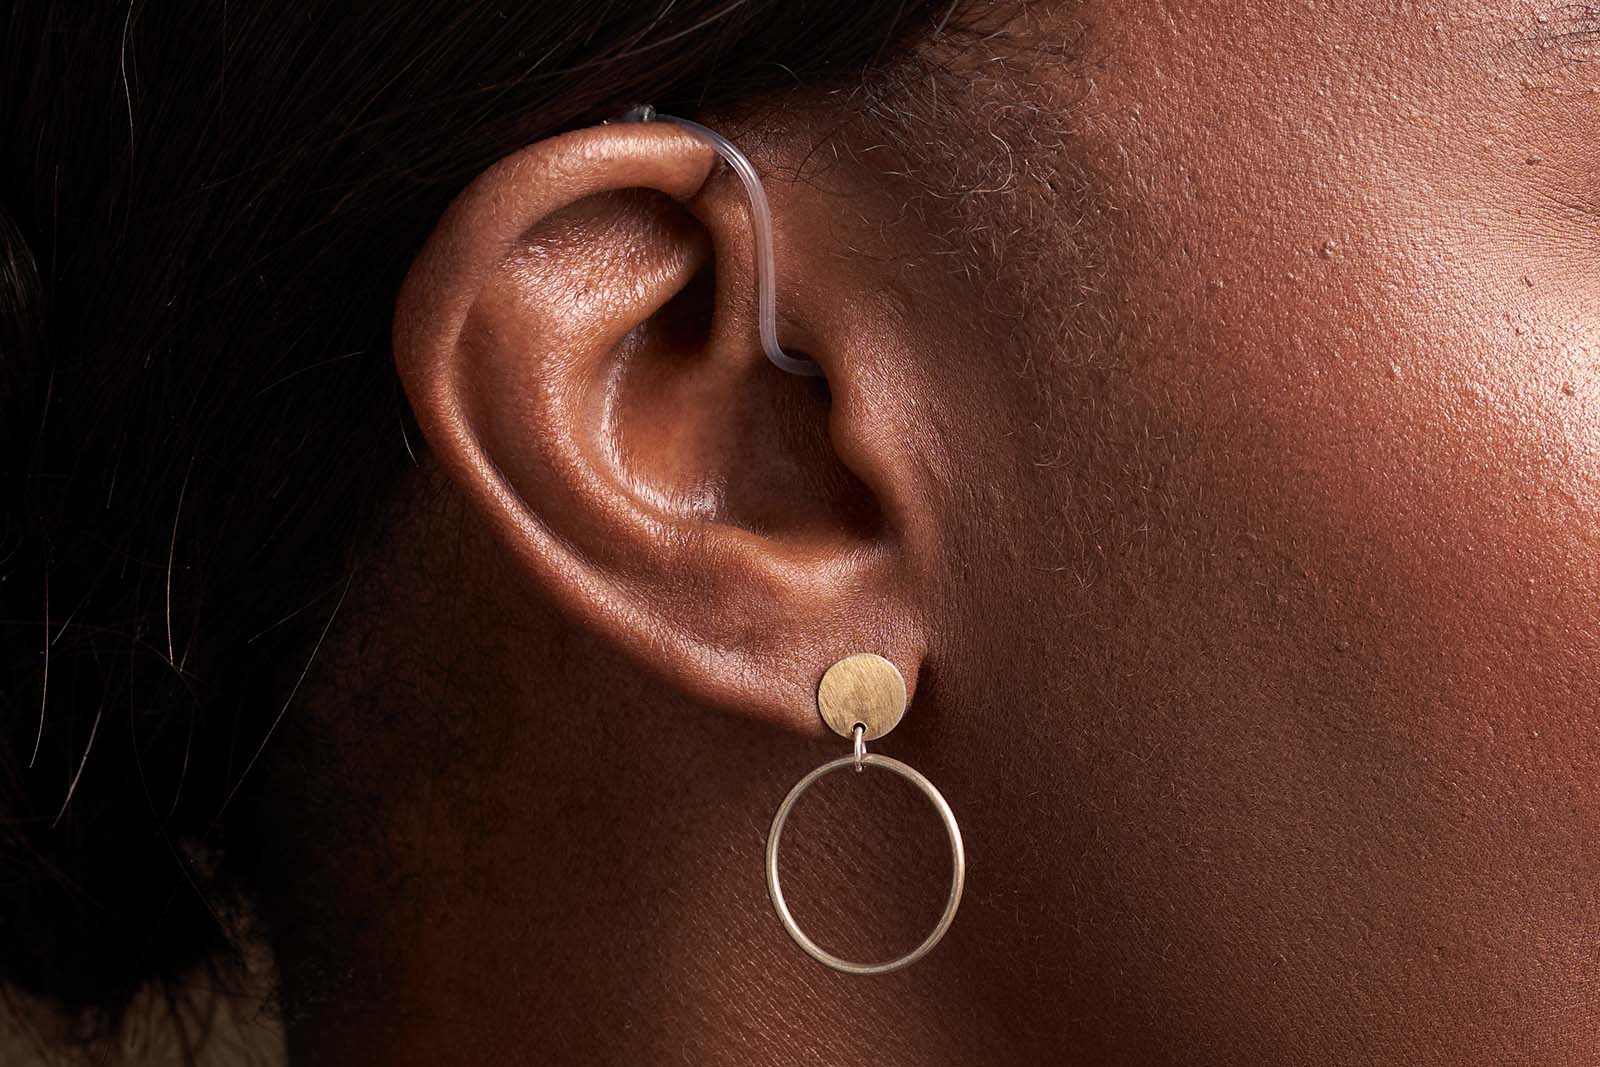 Woman wearing Rexton BiCore Rugged hearing aids